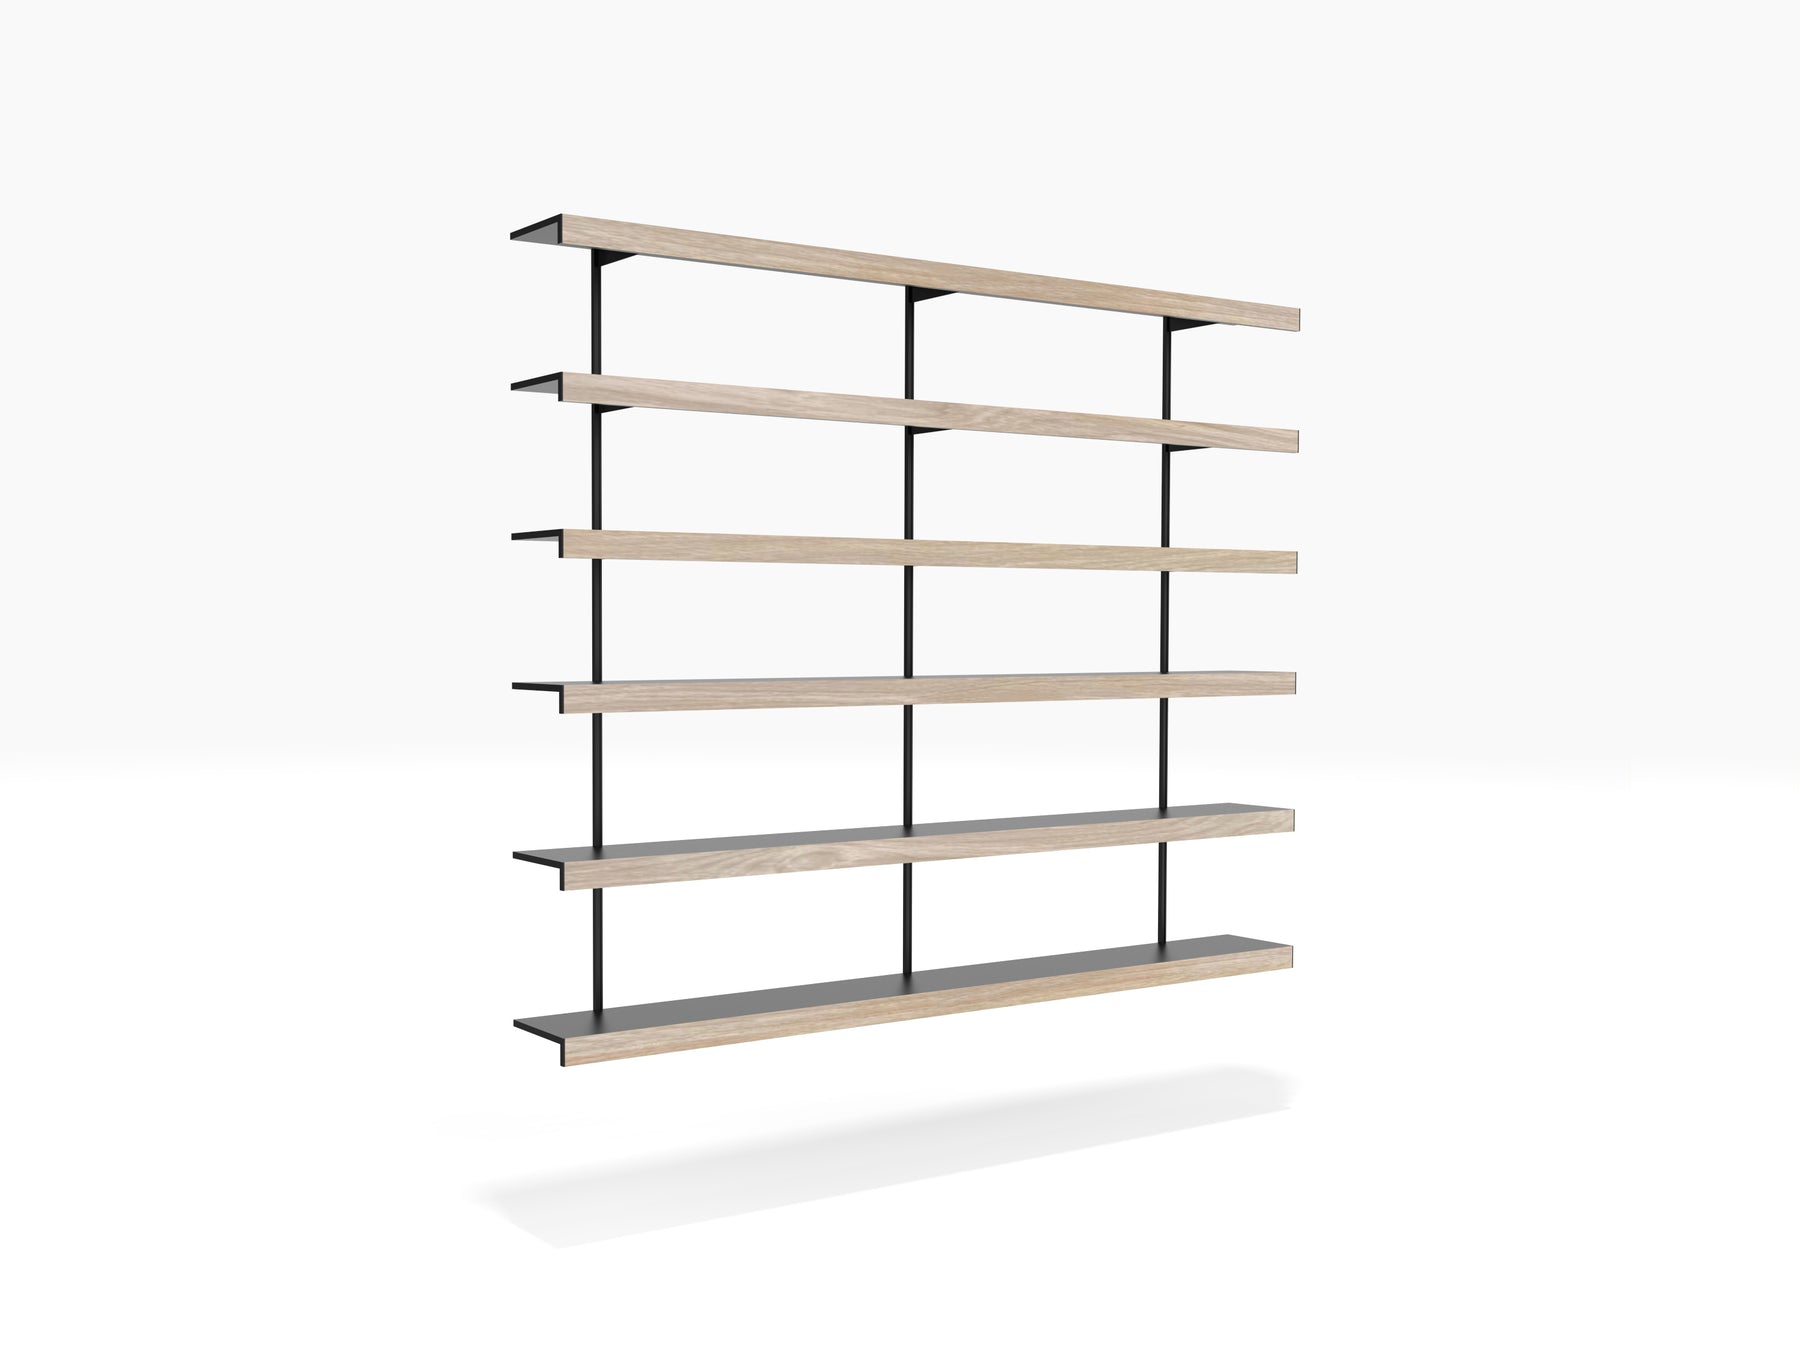 Black & oak modular shelving system with long shelves